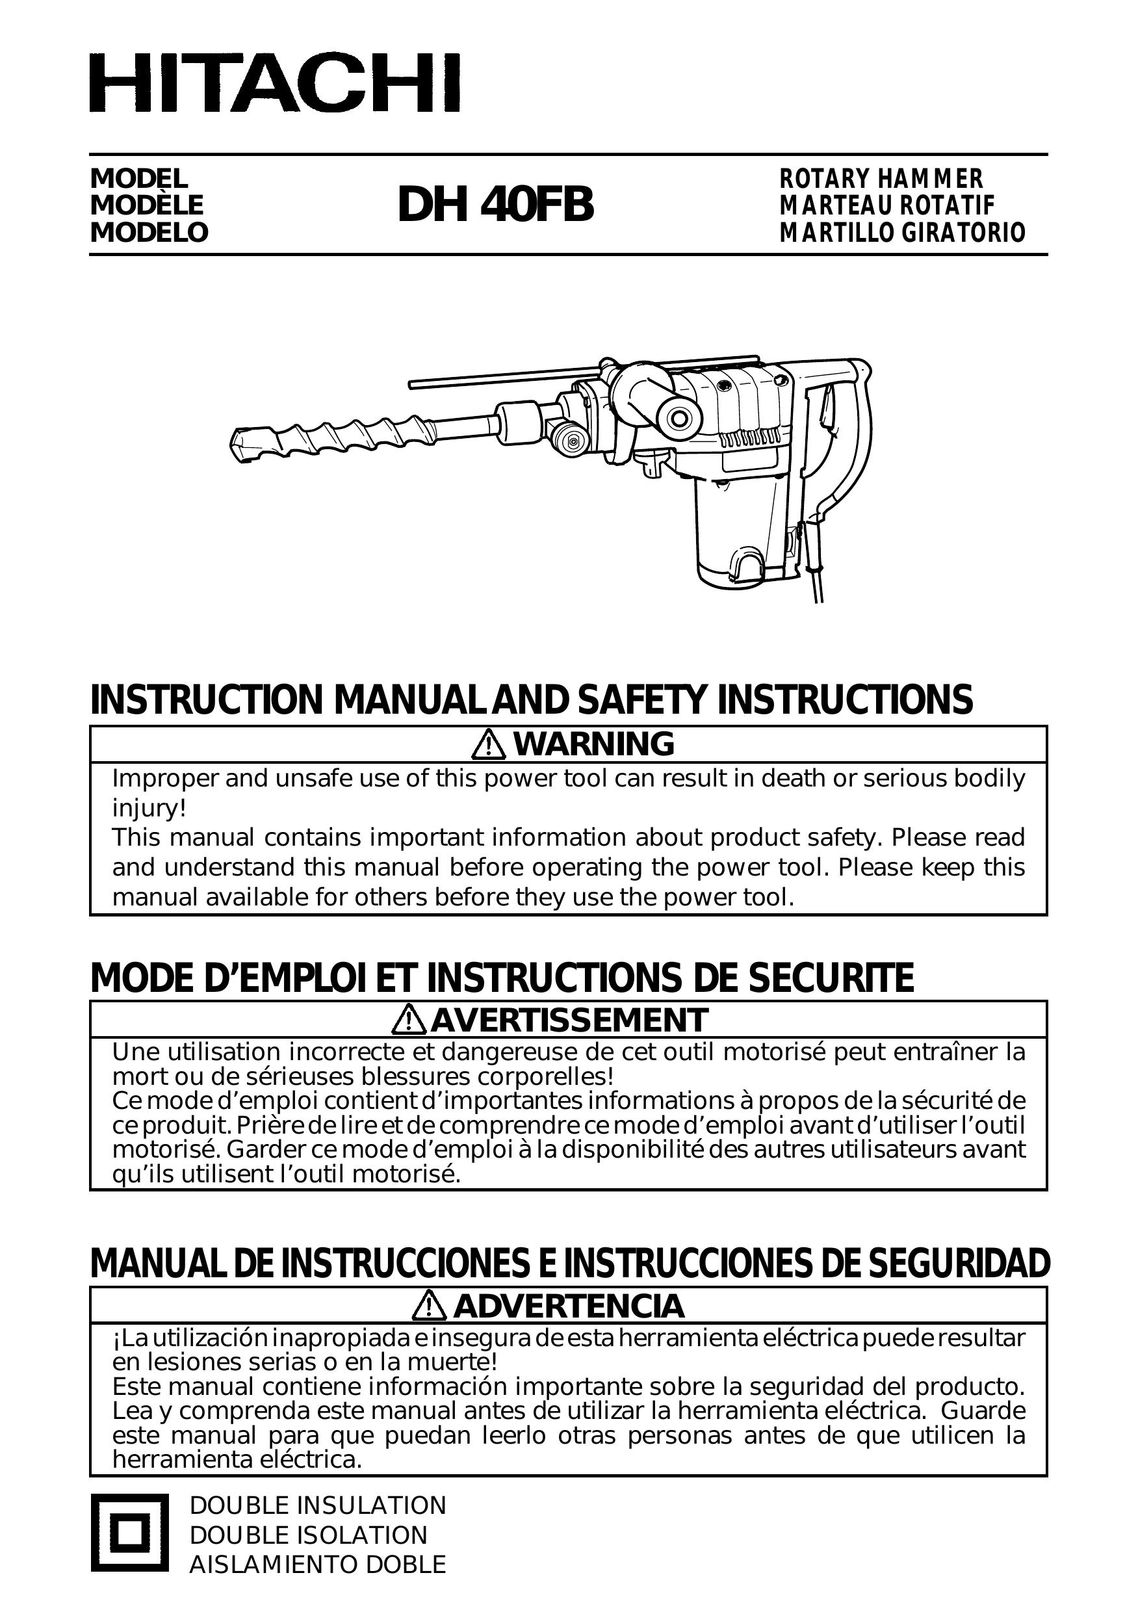 Hitachi DH 40FB Power Hammer User Manual